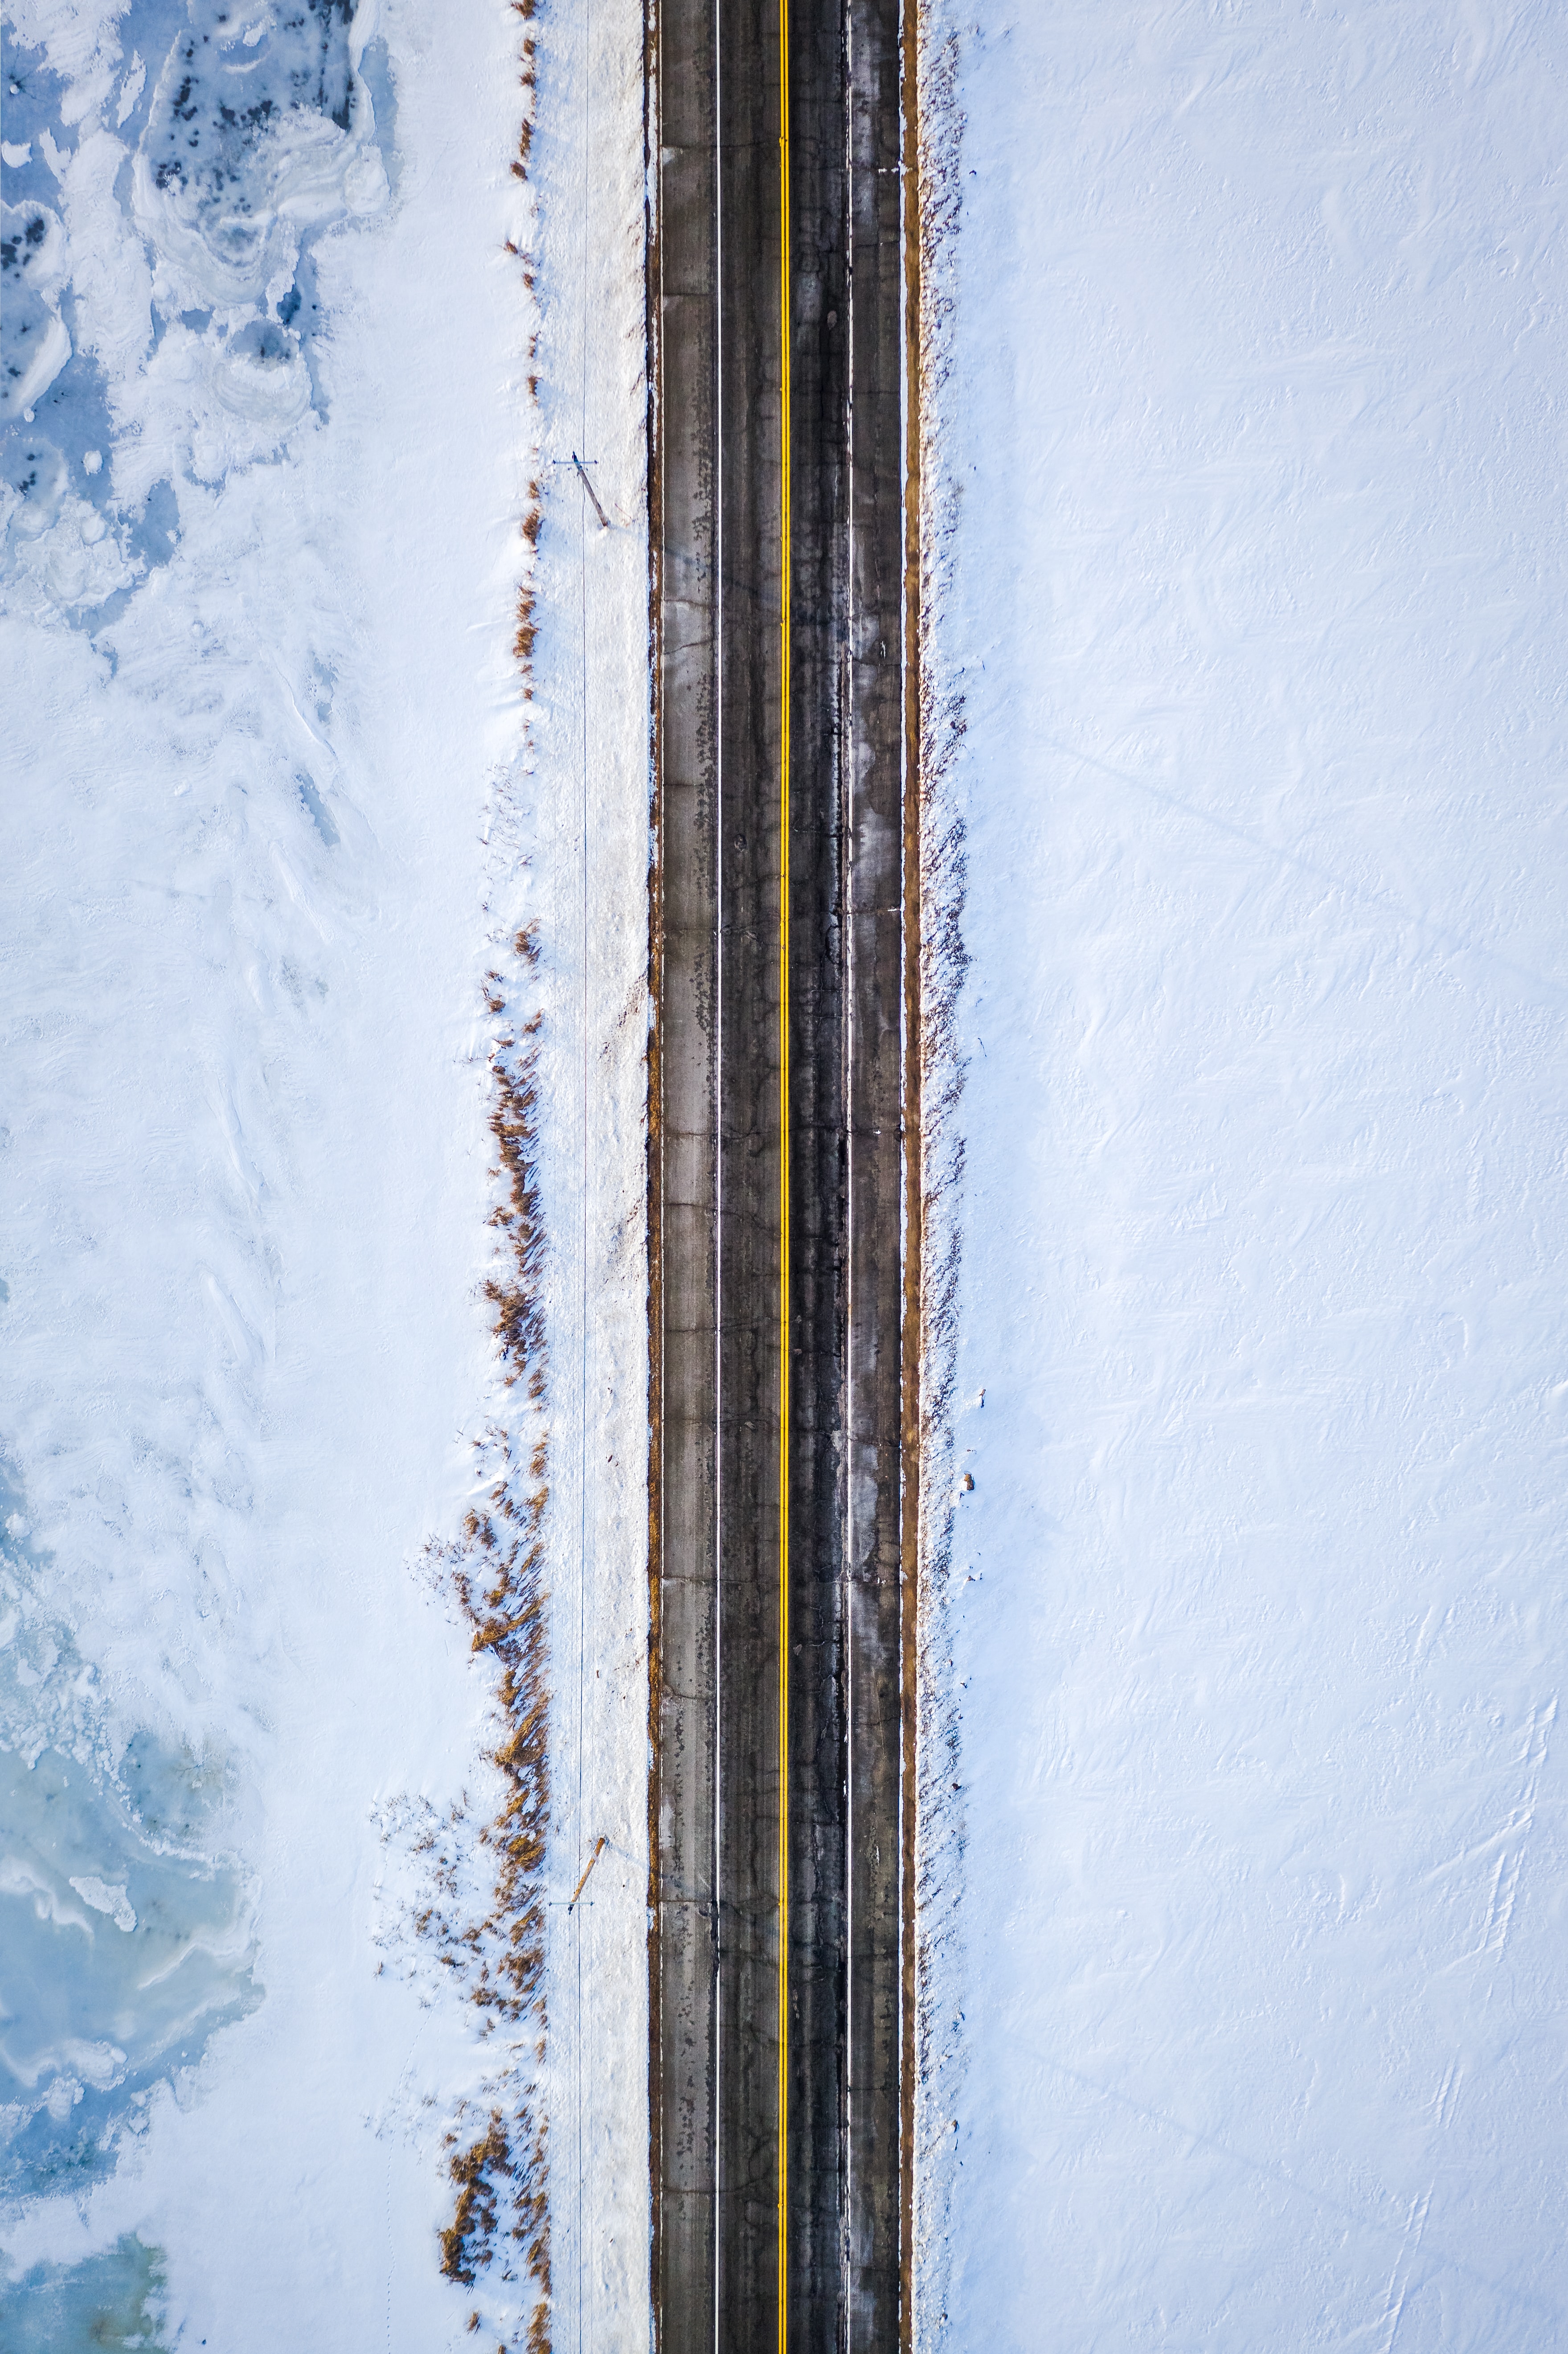 127615 descargar imagen naturaleza, nieve, vista desde arriba, camino, margen: fondos de pantalla y protectores de pantalla gratis